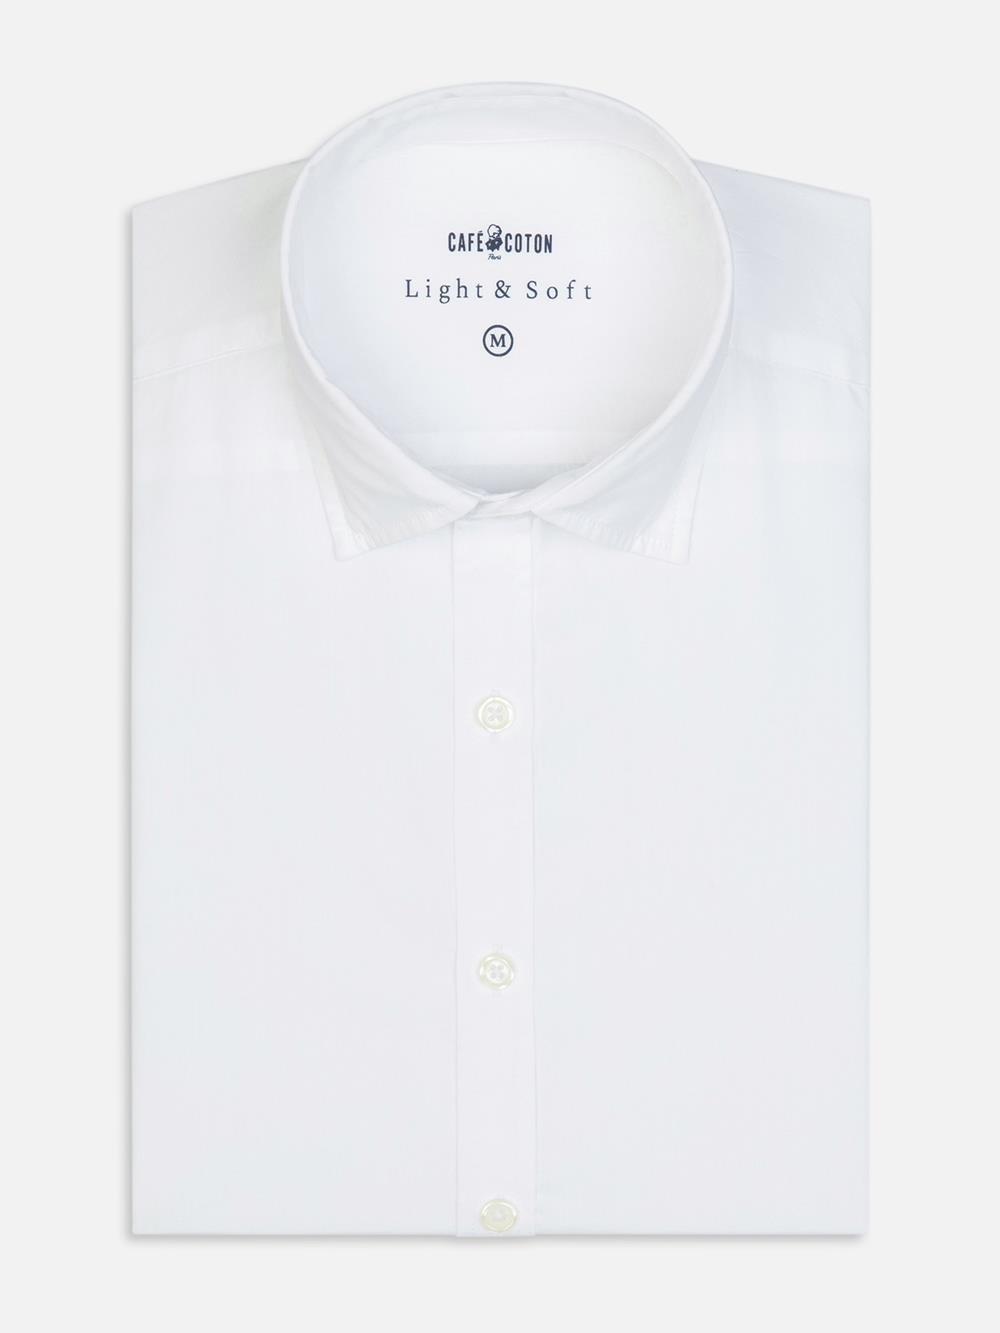 White cotton voile shirt